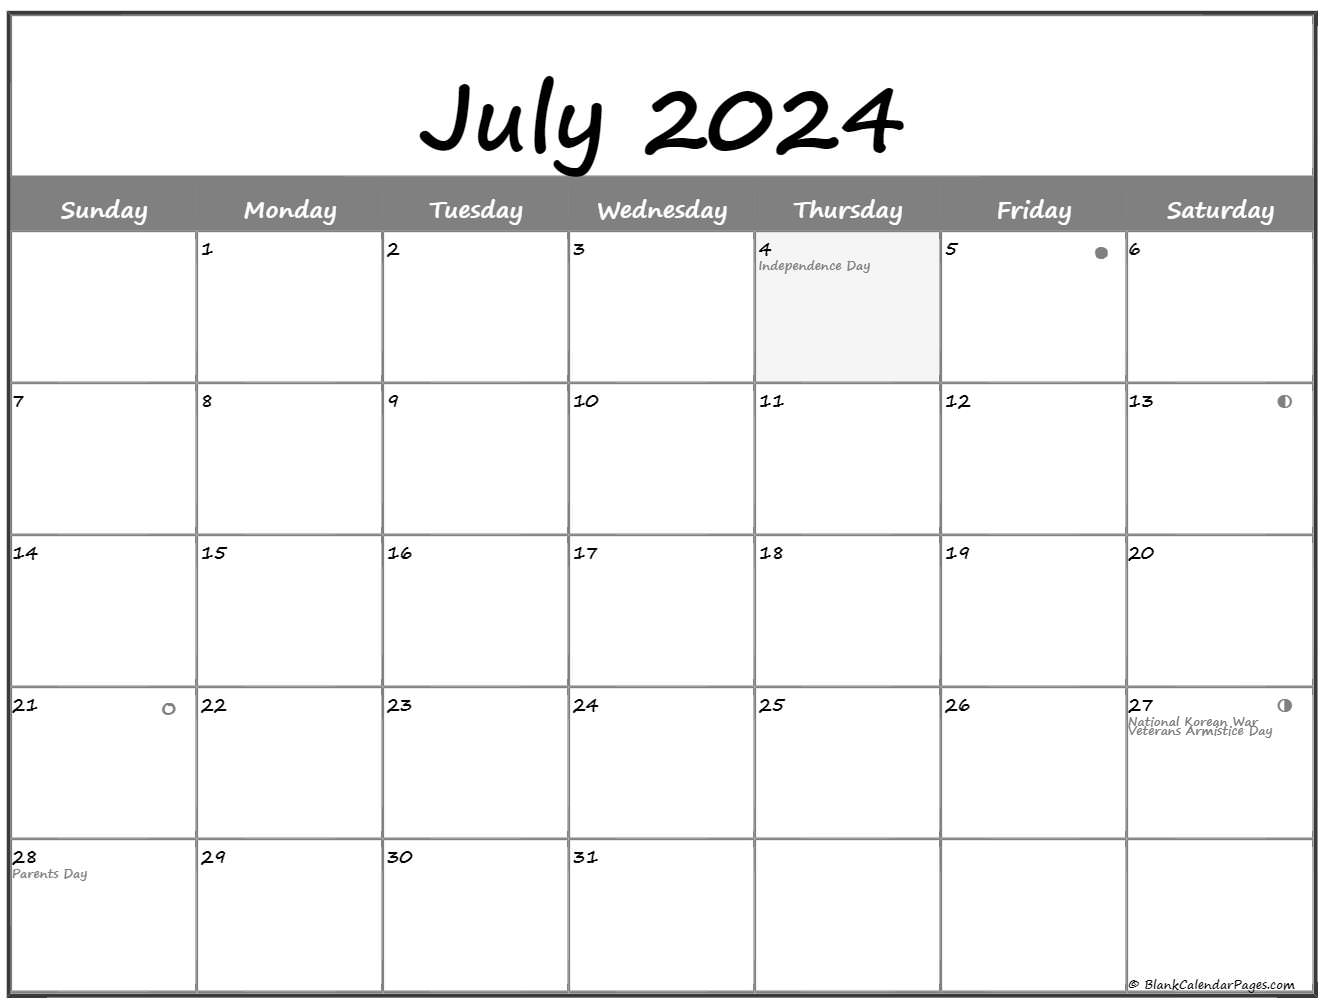 Moon Phase Calendar July 2022 July 2021 Lunar Calendar | Moon Phase Calendar